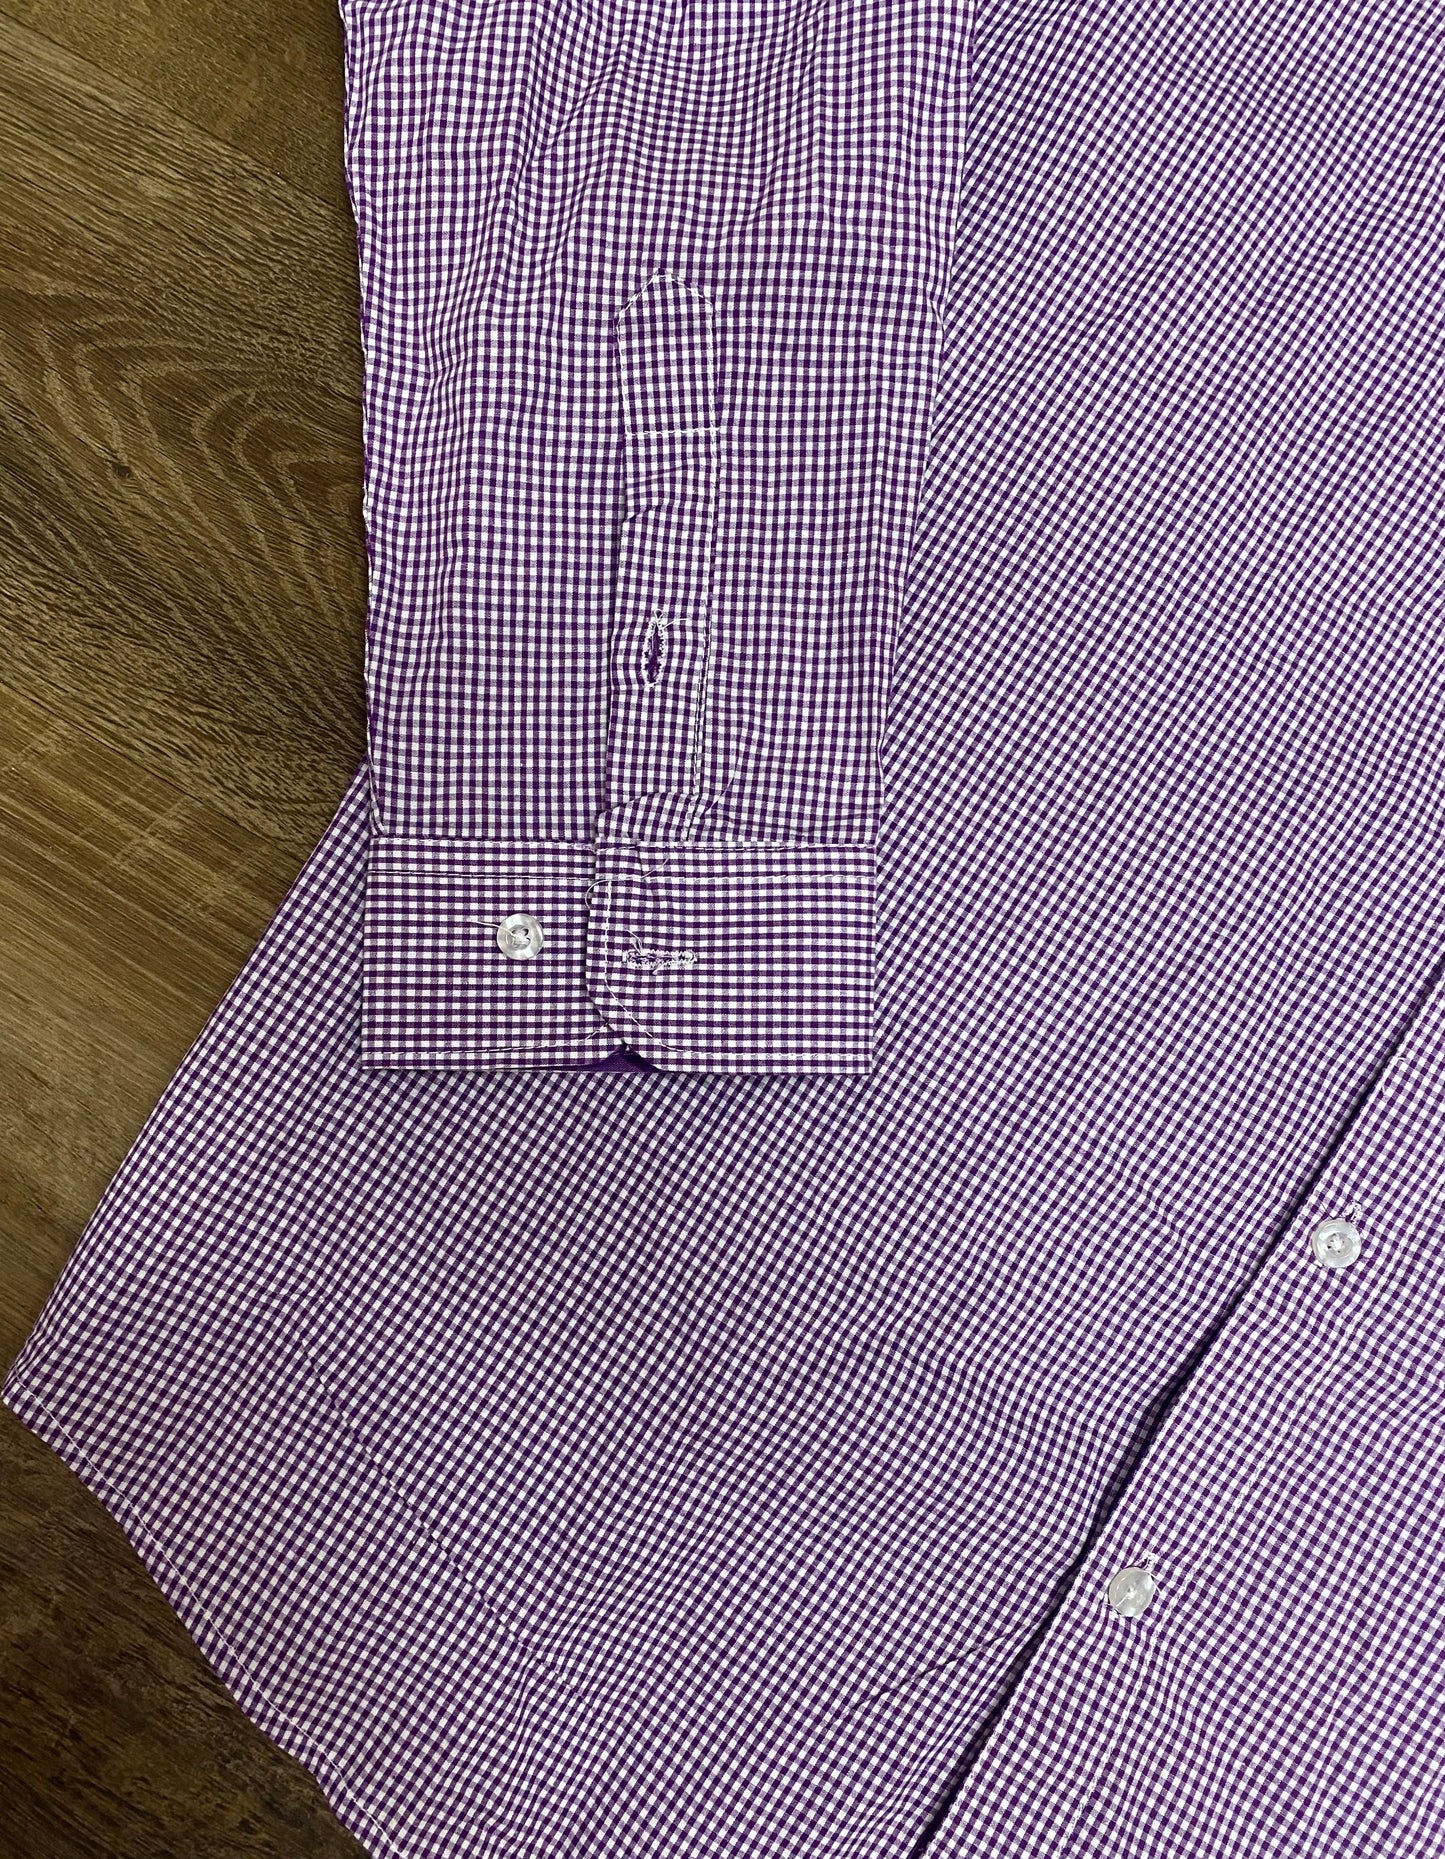 Men’s long sleeve button up(purple/white)